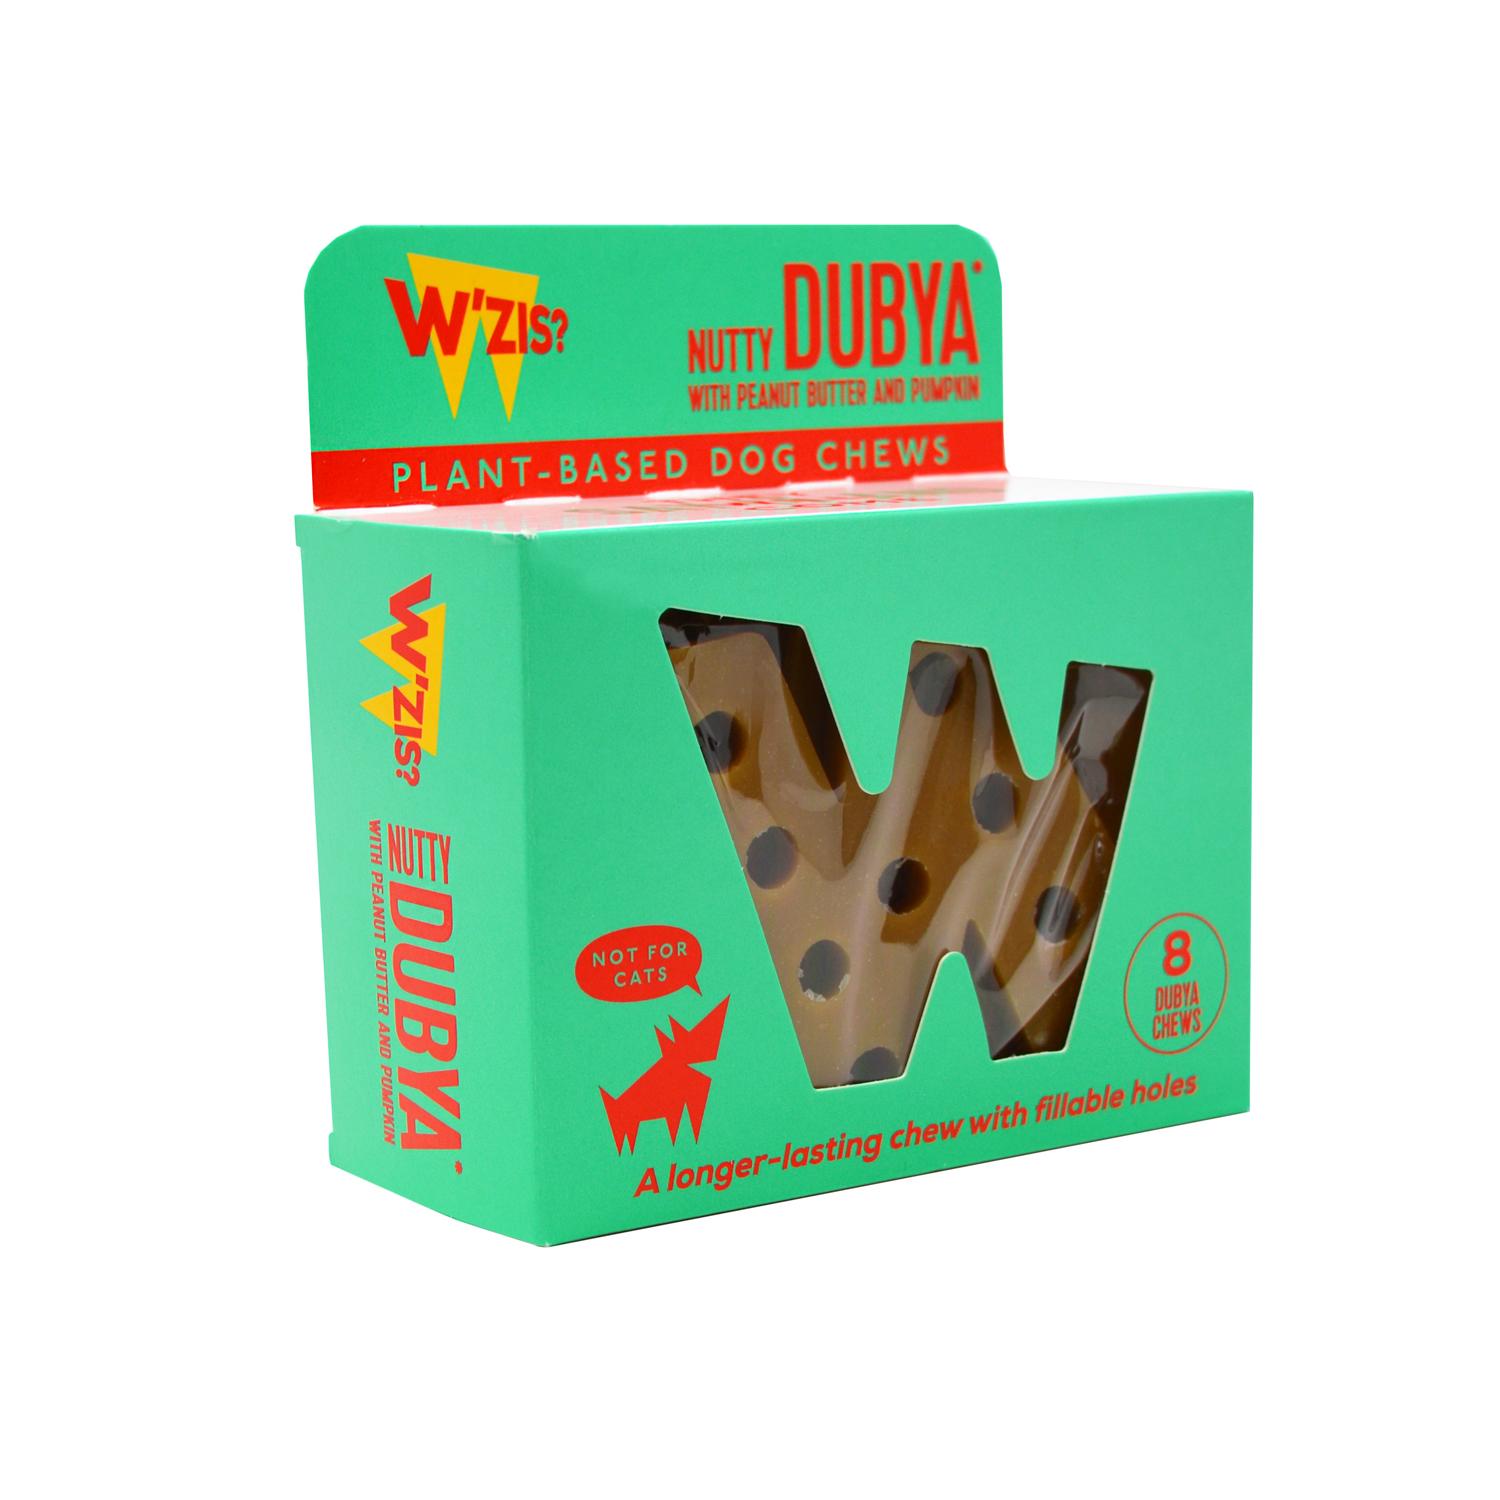 An angled pack of W'ZIS? Nutty dubya small sized vegan dog chews